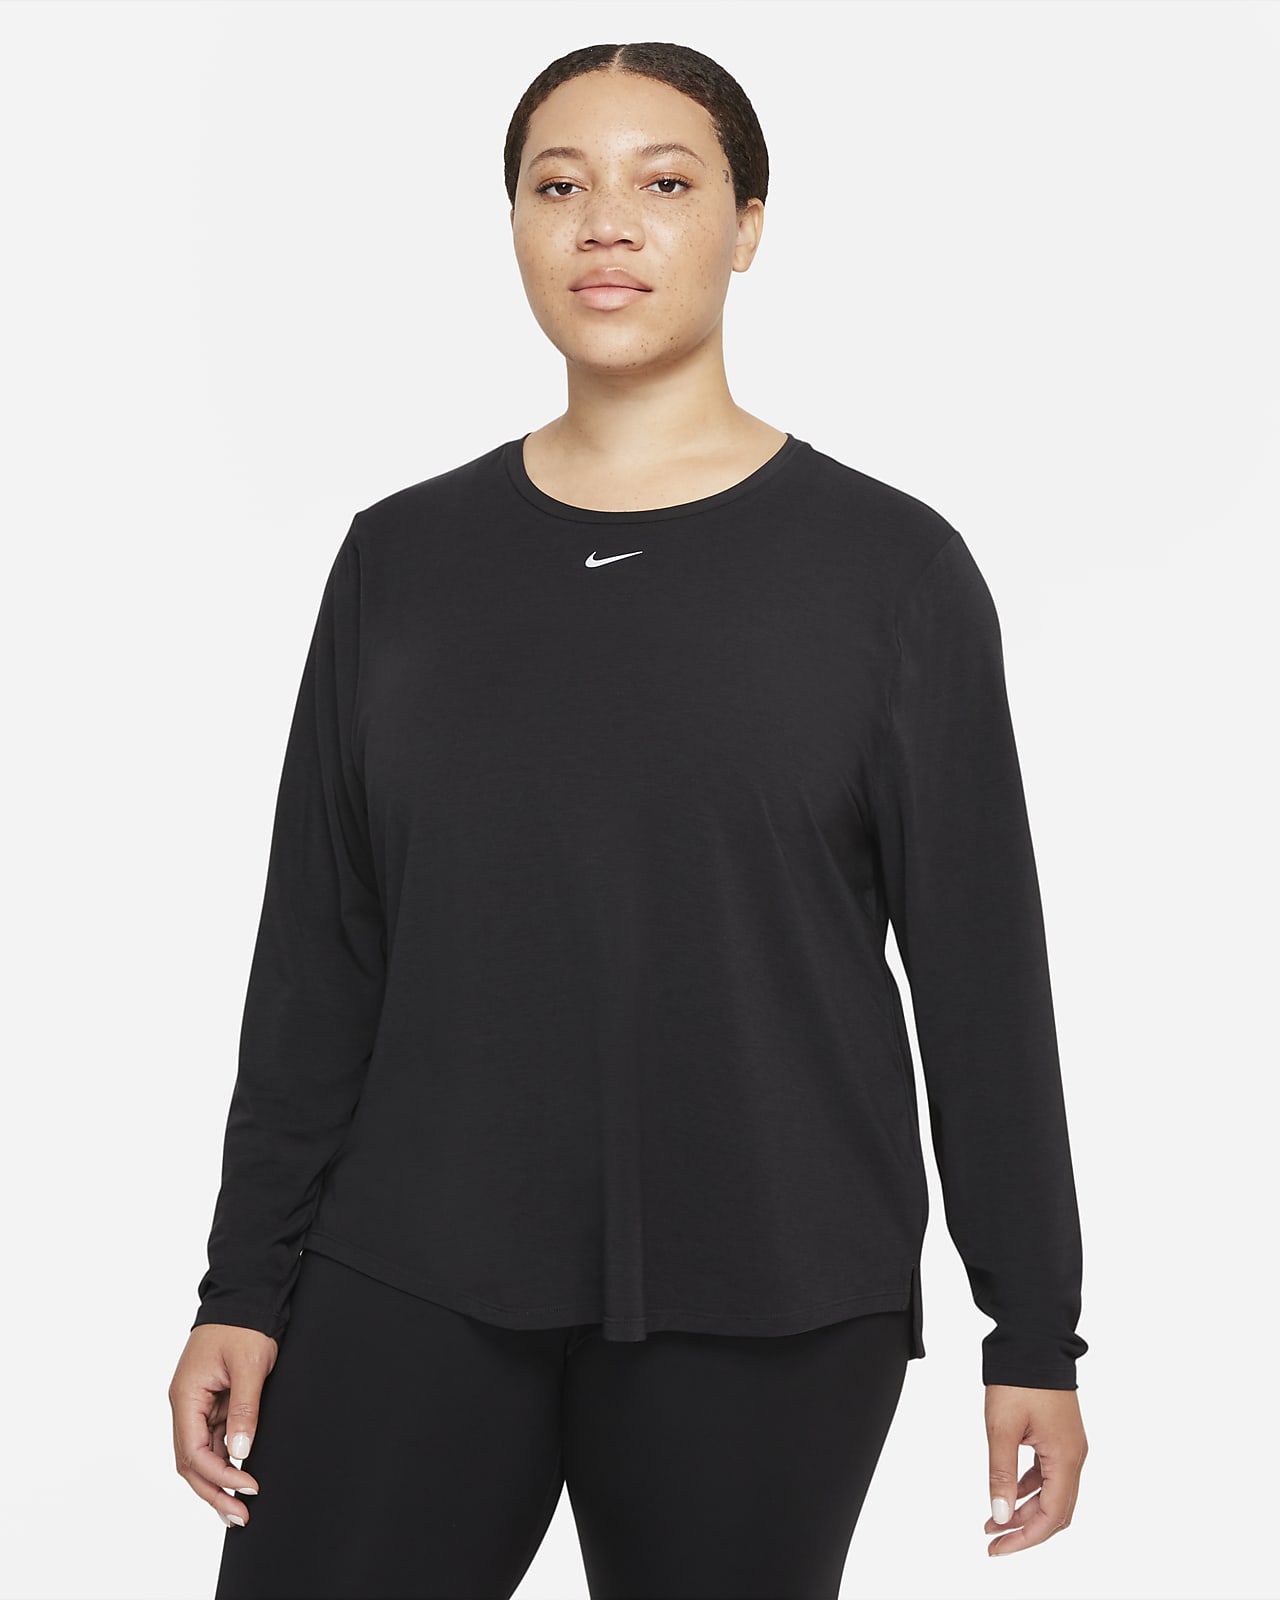 Prenda para la parte superior de manga larga de ajuste estándar para mujer Nike Dri-FIT One Luxe (talla grande)